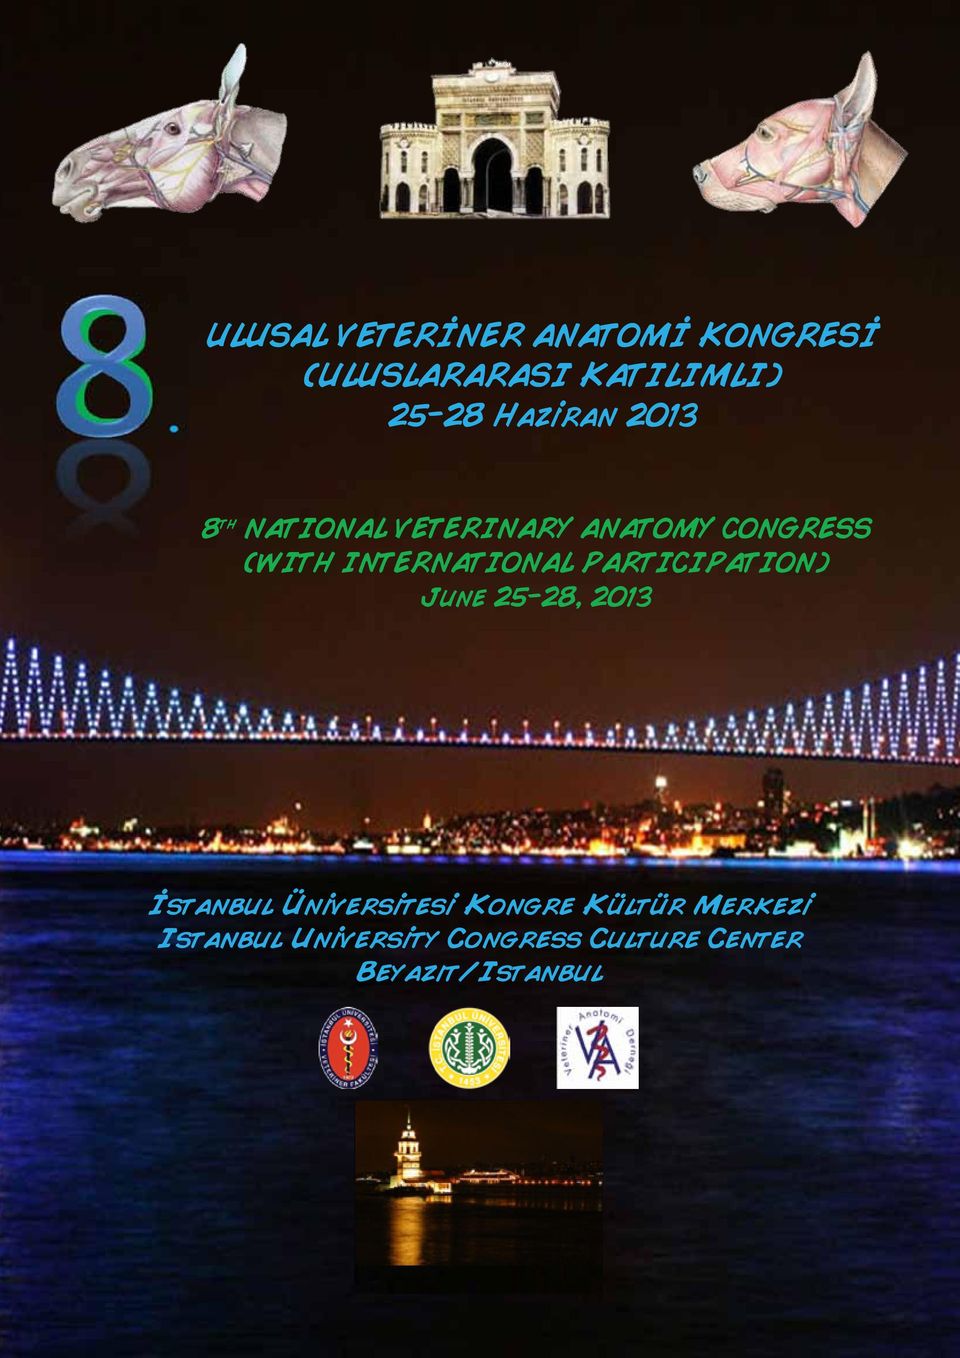 INTERNATIONAL PARTICIPATION) June 25-28, 2013 İstanbul Üniversitesi